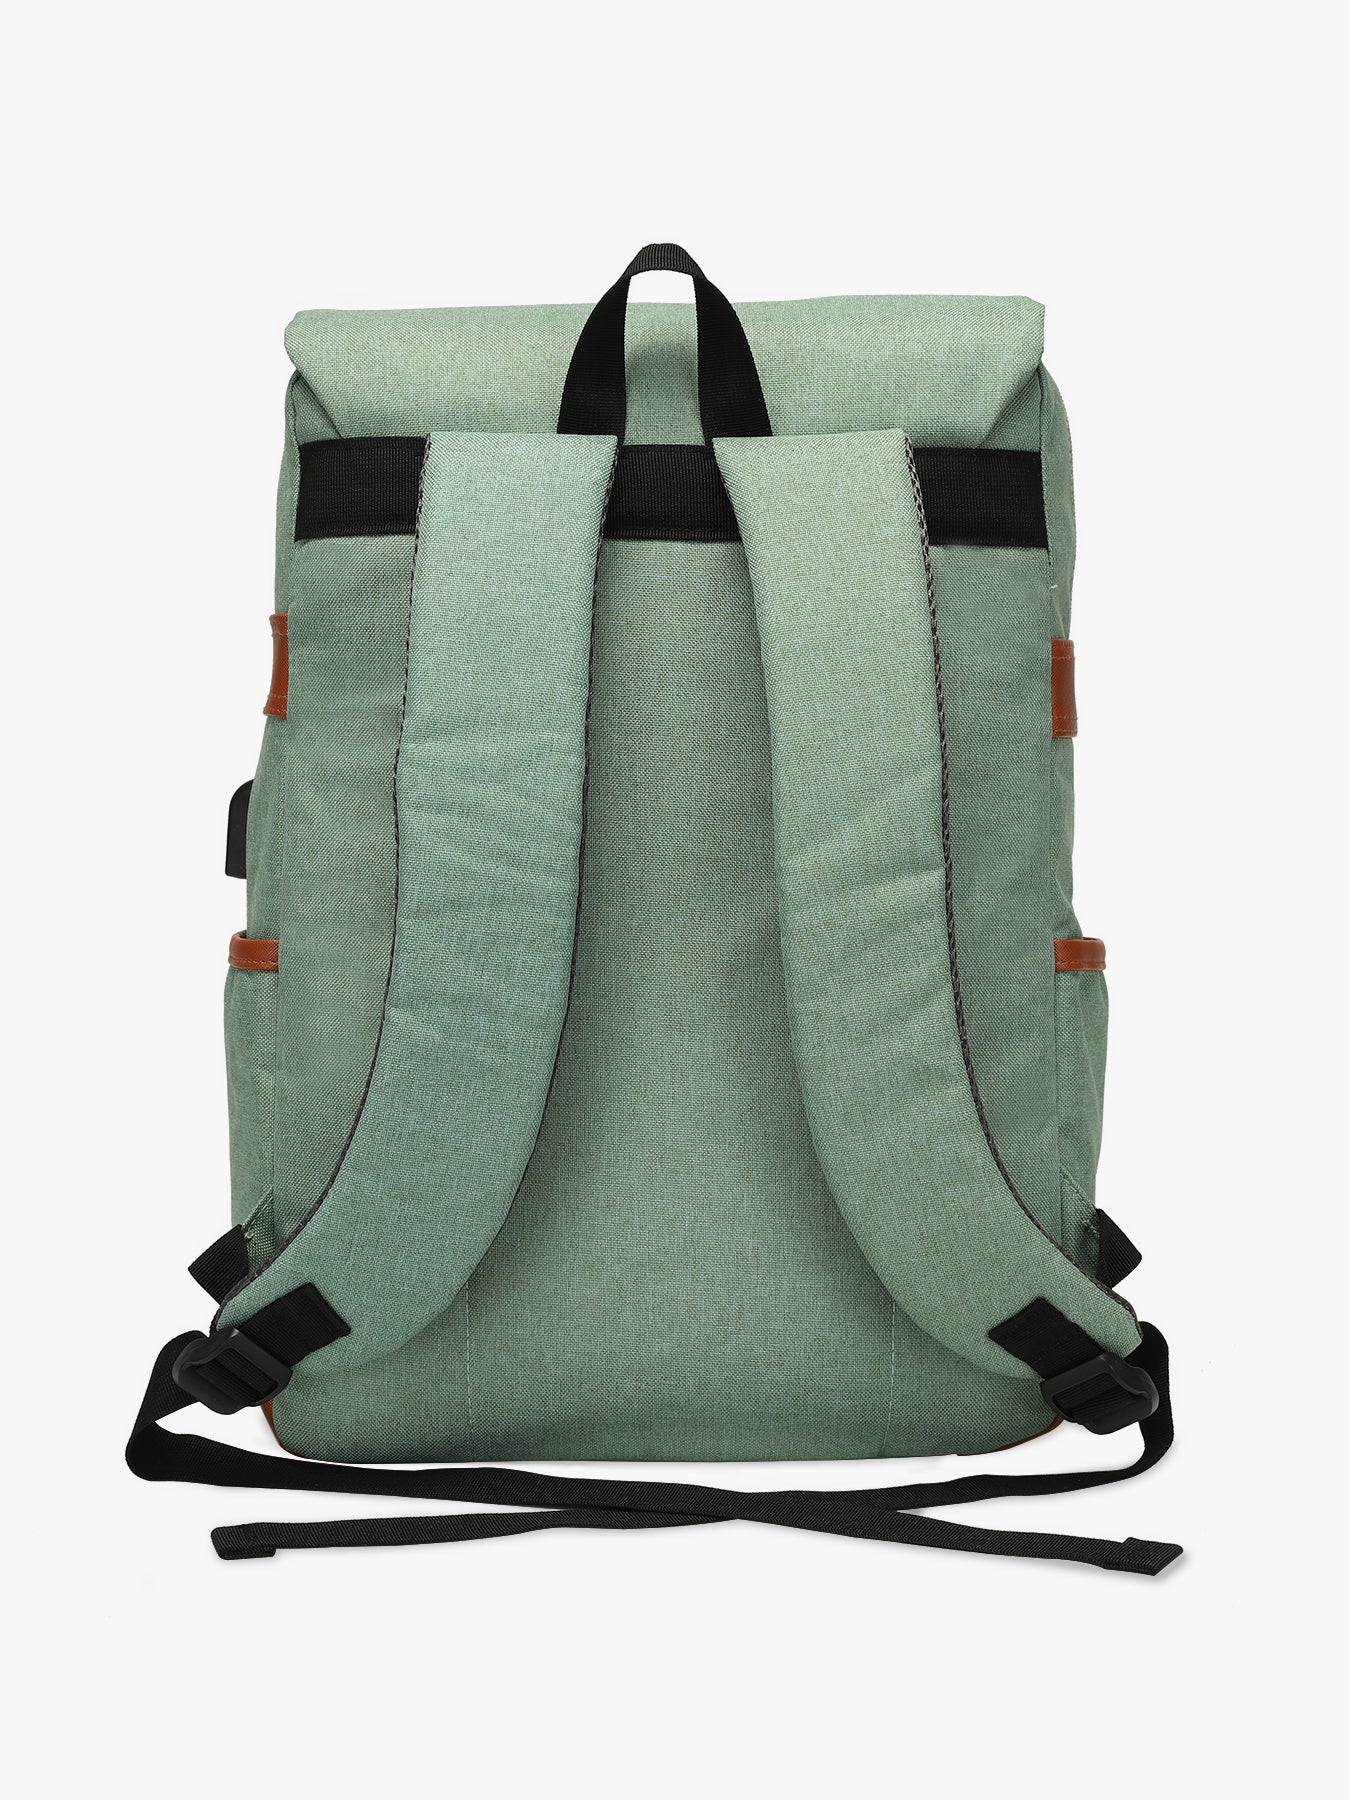 MODOKER Vintage Laptop Backpack for Women Men- Green Laptop Backpack 